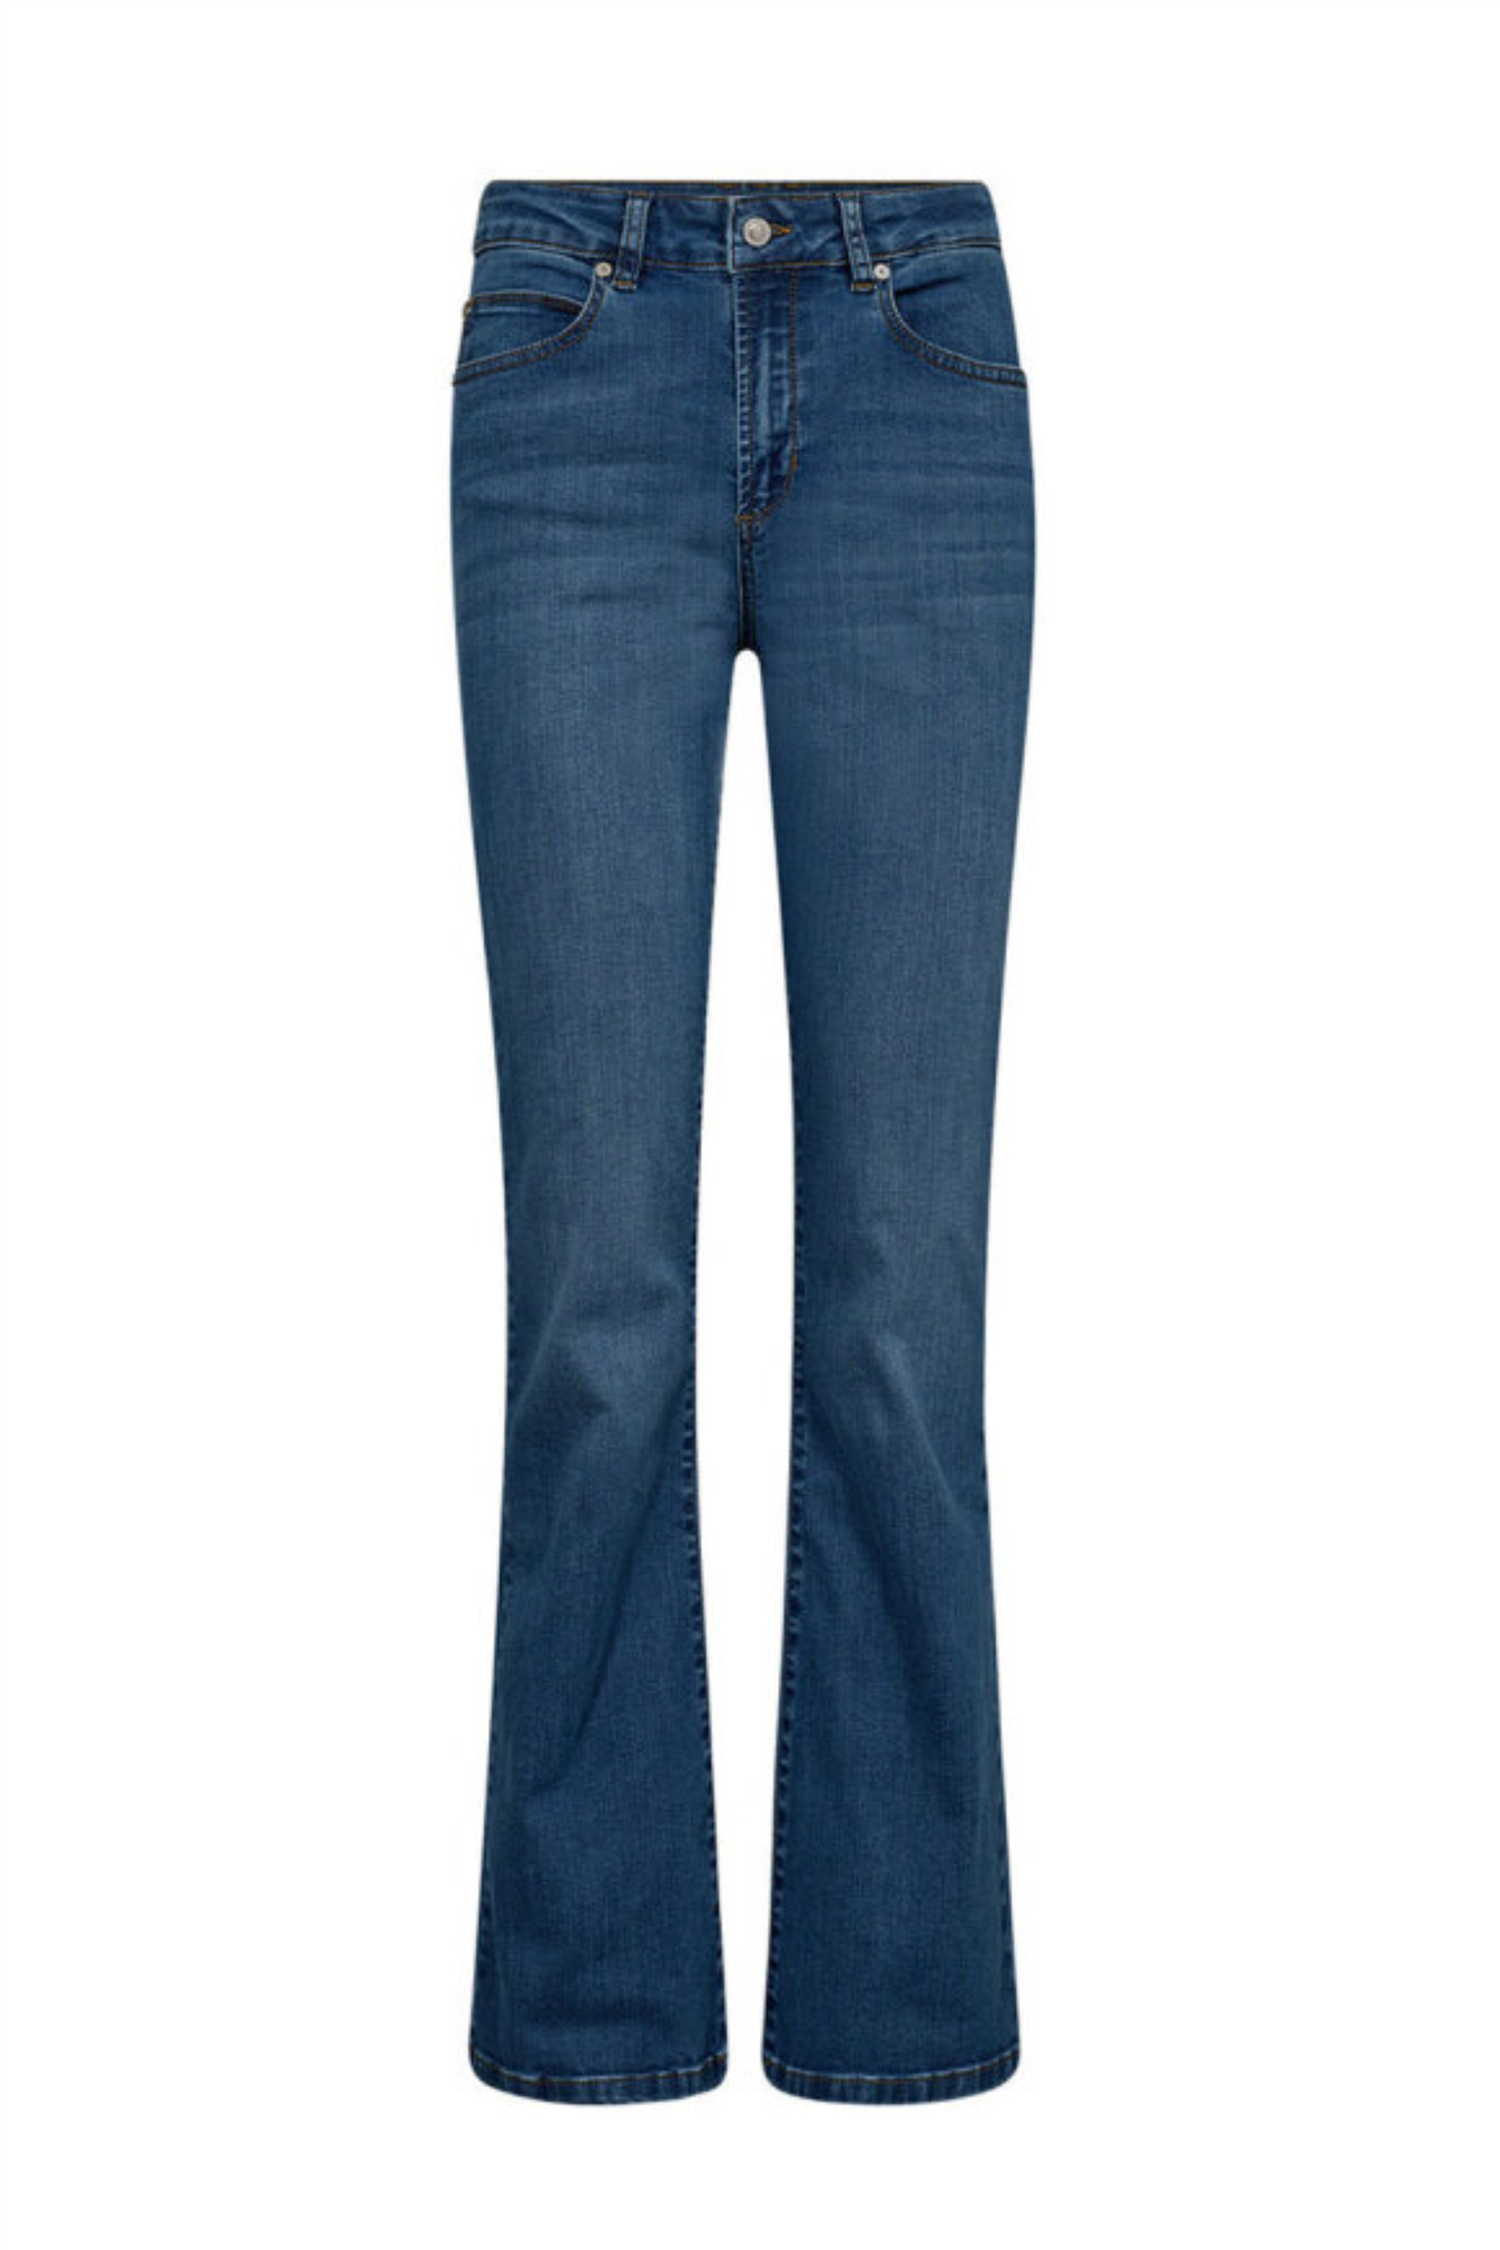 Tara Jeans Wash Original Vicky Denim Blue 32"